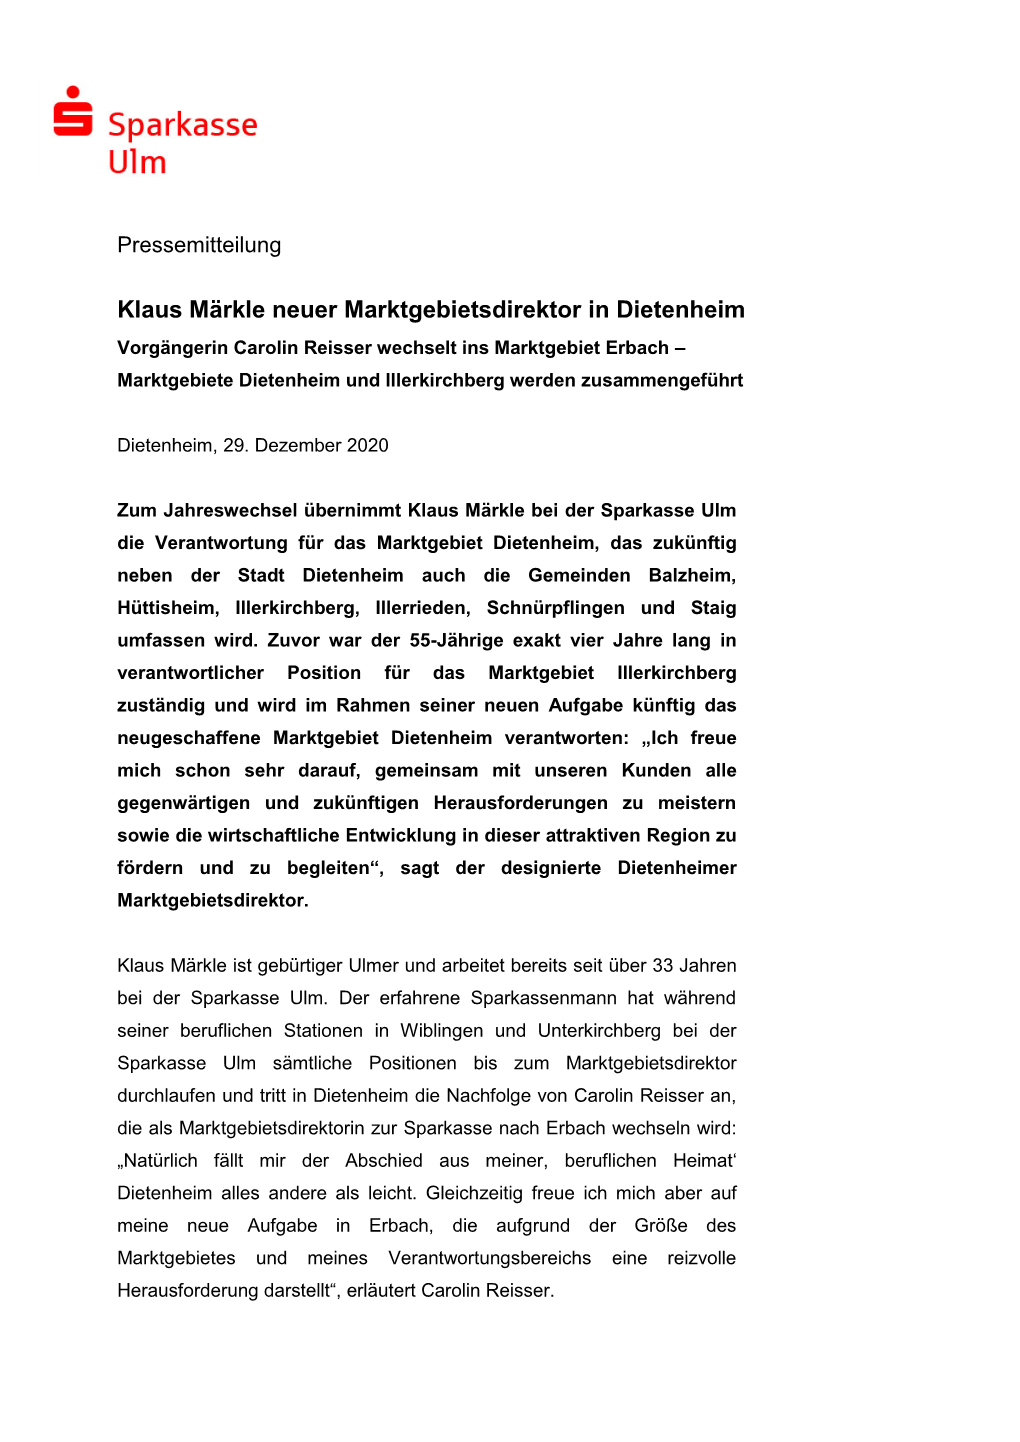 Klaus Märkle Neuer Marktgebietsdirektor in Dietenheim